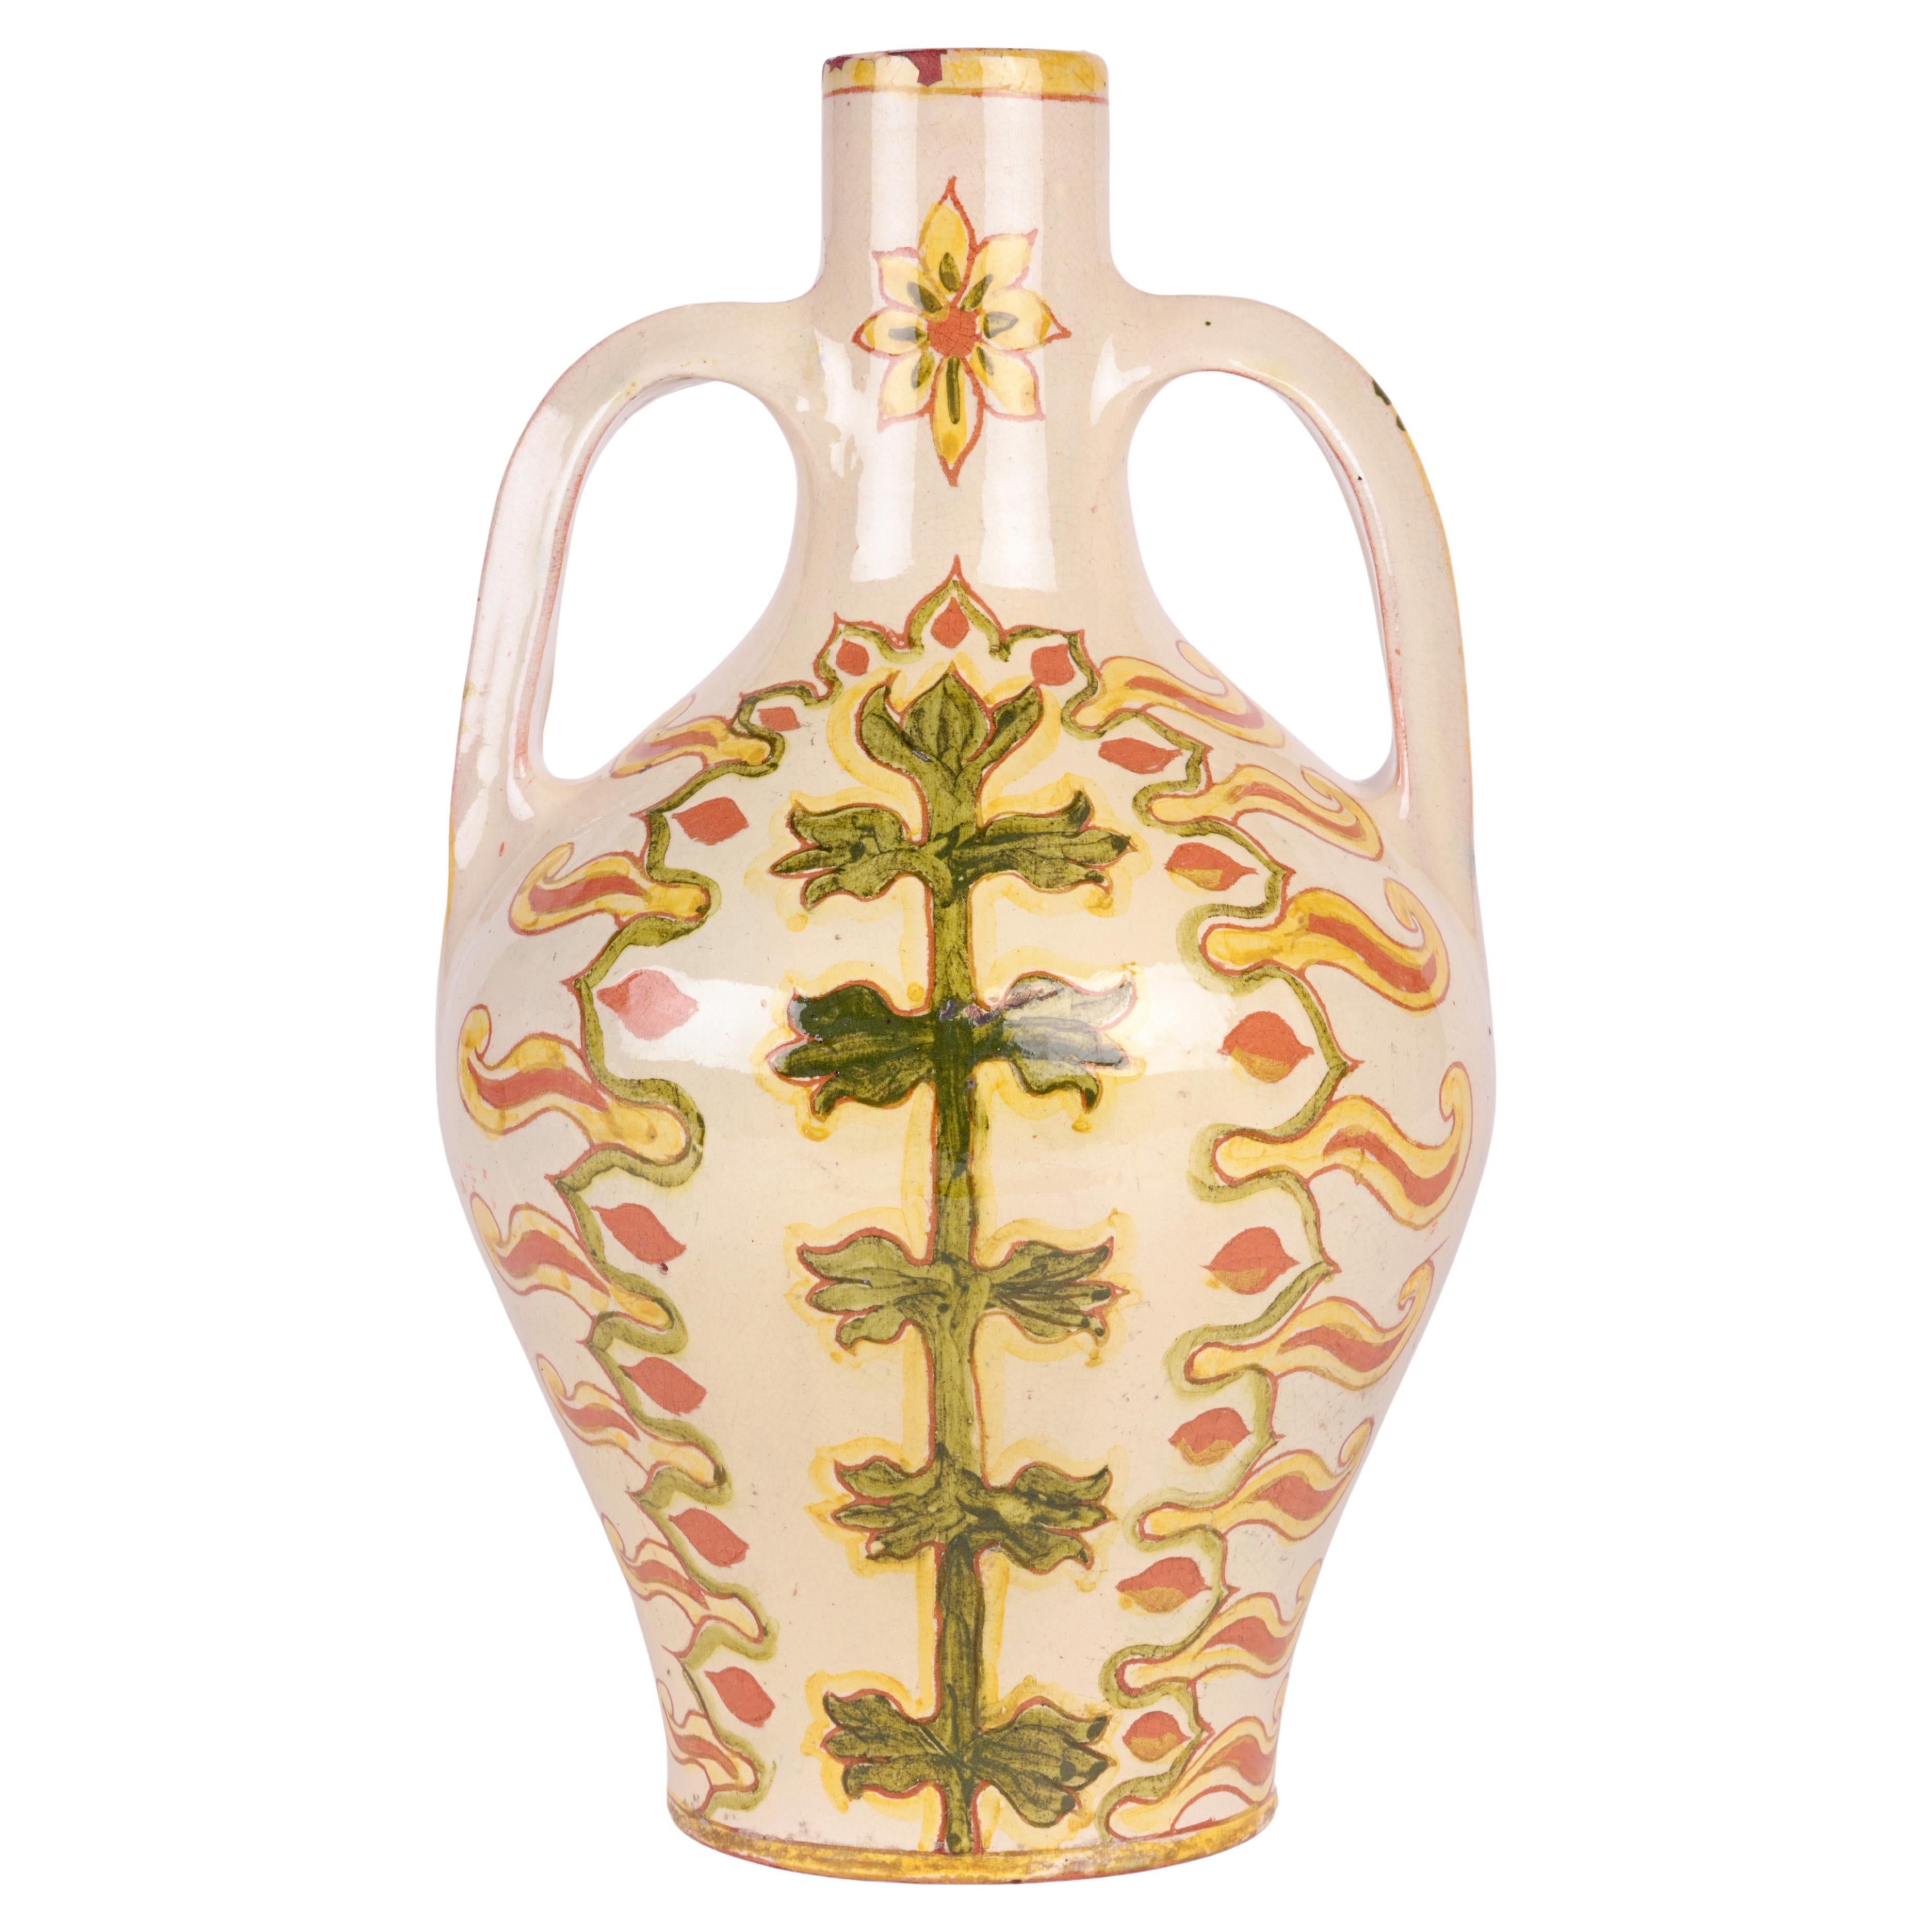 Lizzie Wilkins Della Robbia Birkenhead Arts & Crafts Vase For Sale